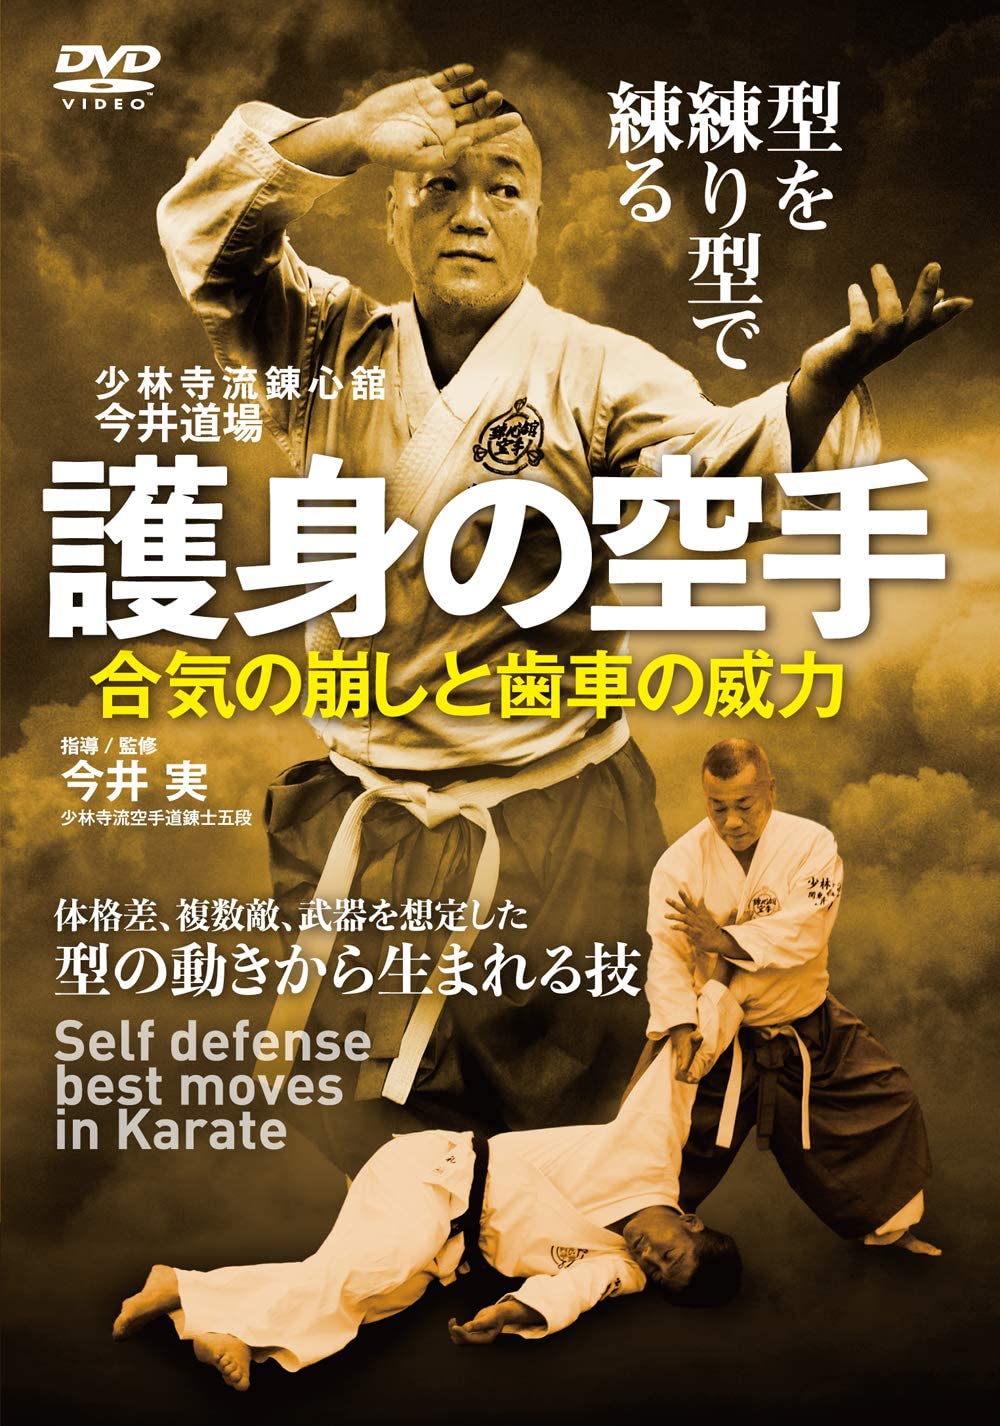 Self Defense Karate DVD by Minoru Imai - Budovideos